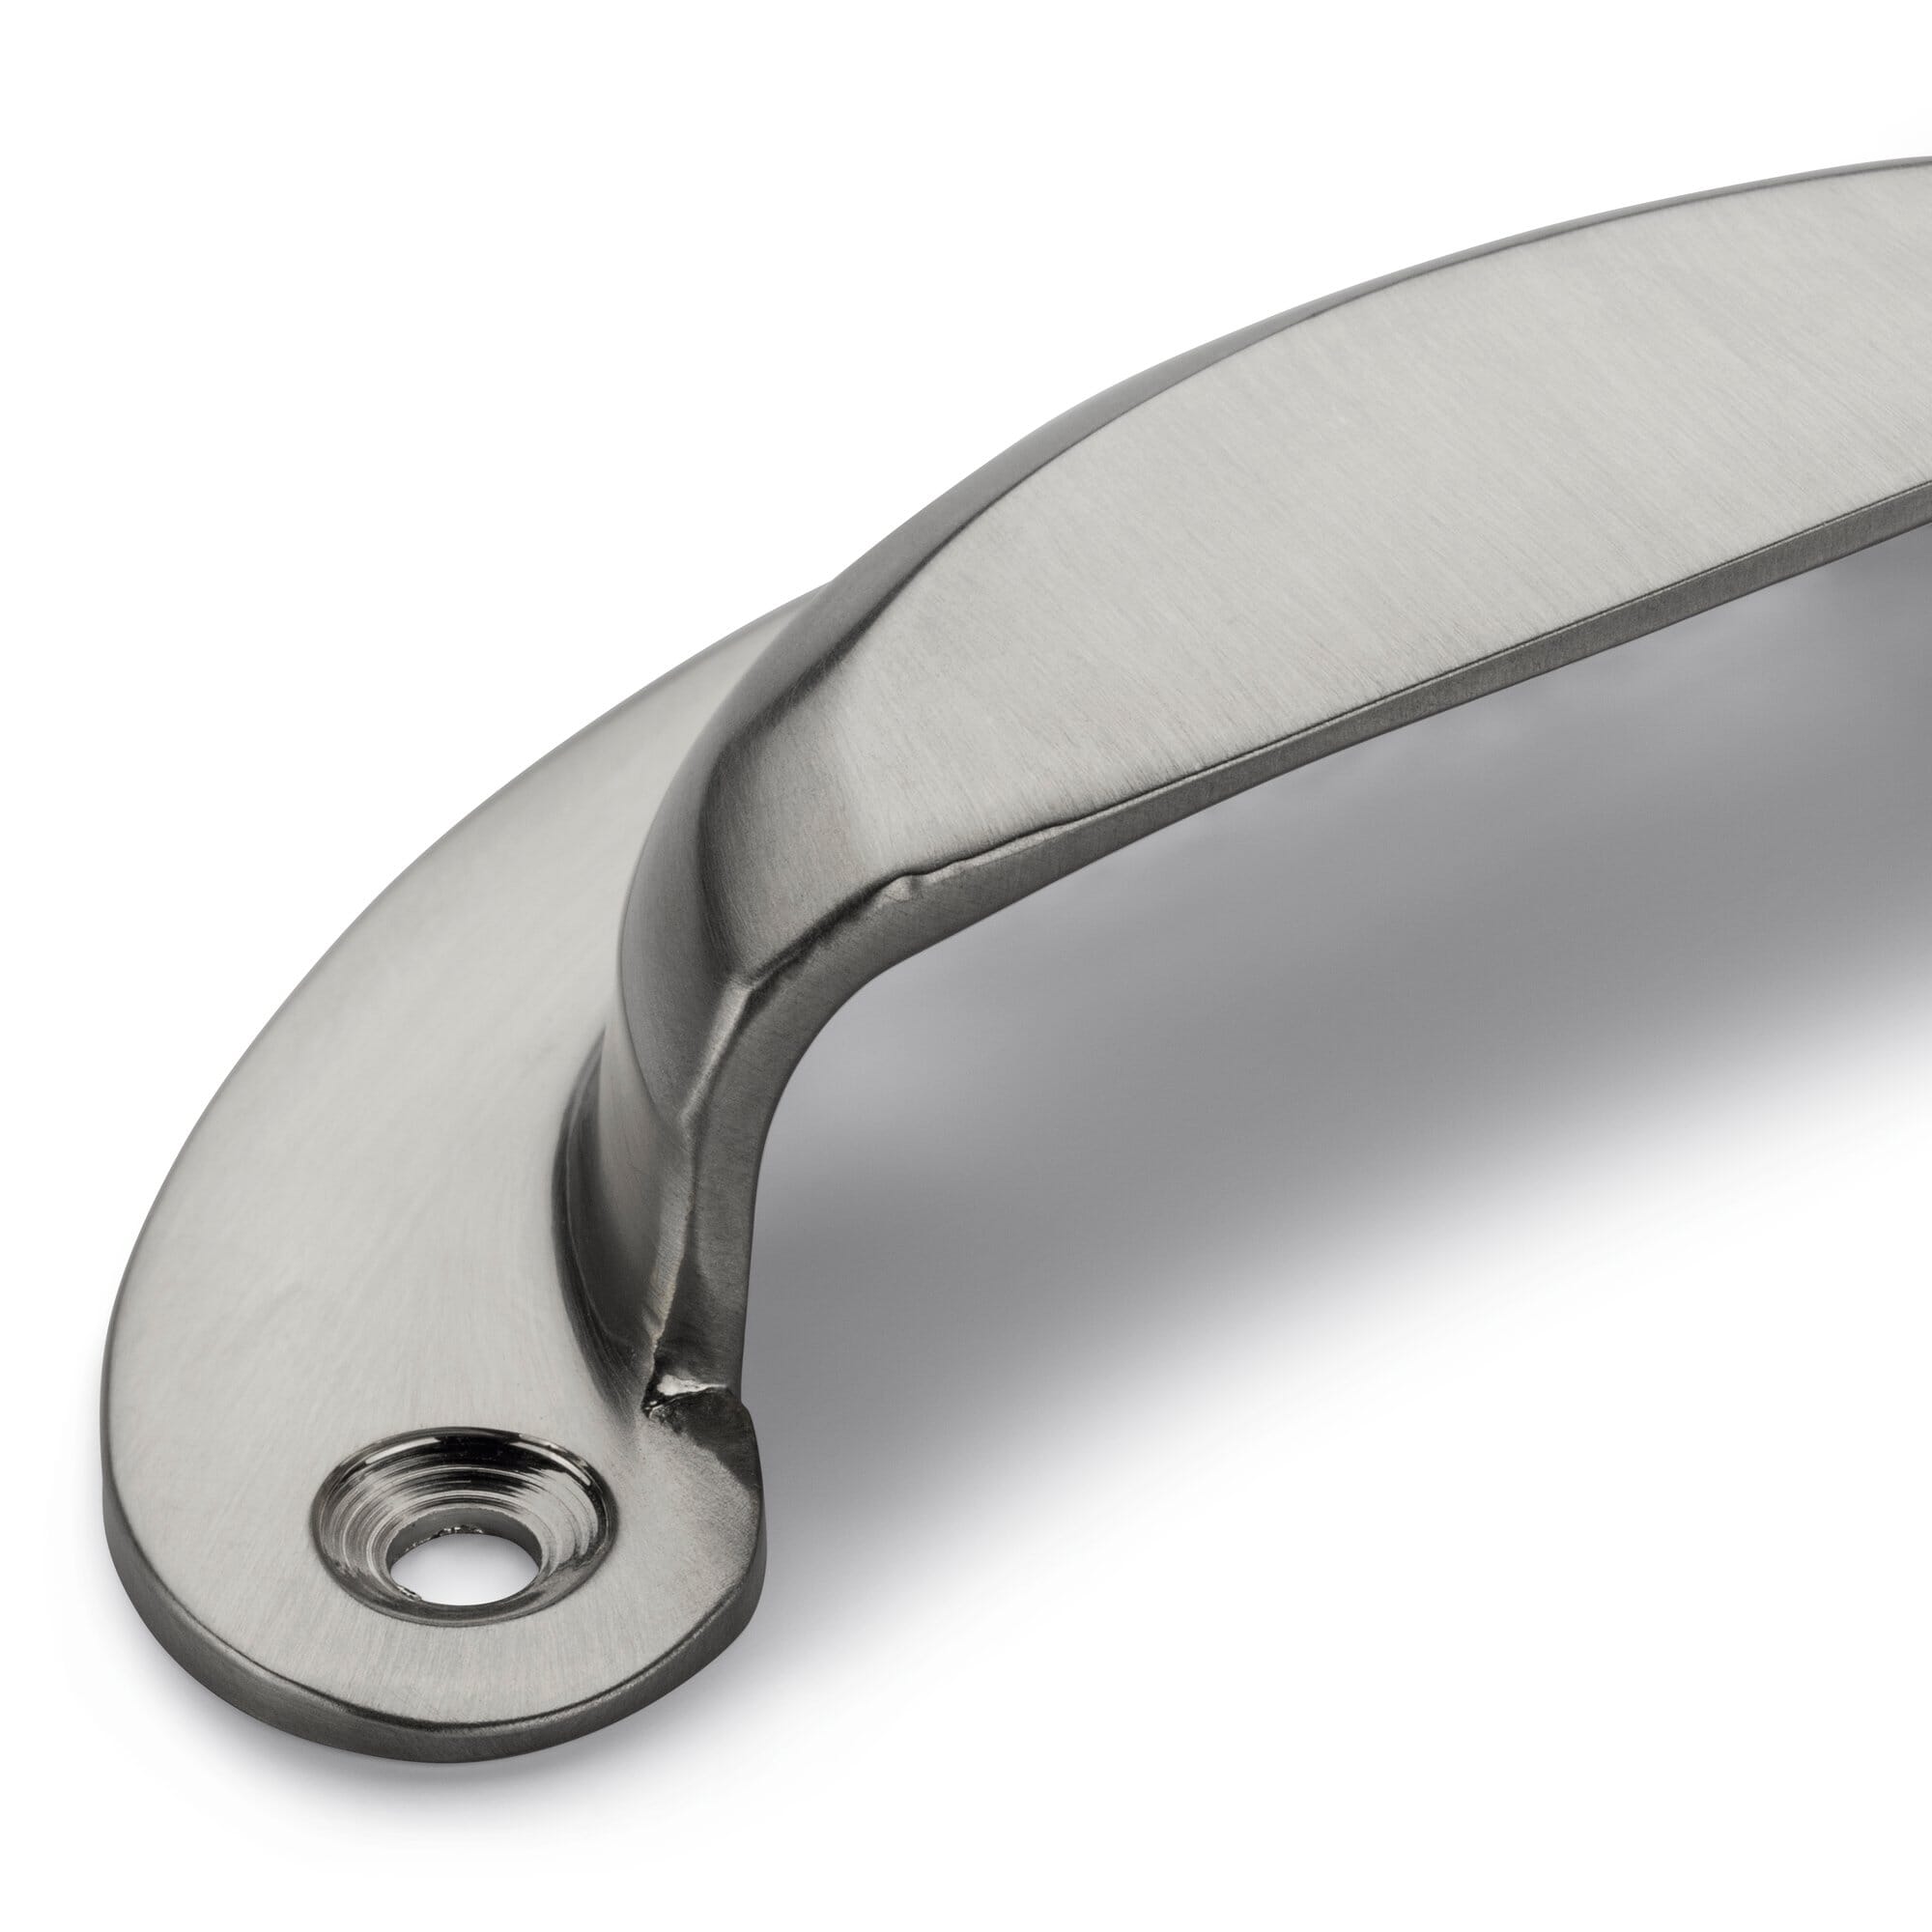 Scalpel handle stainless steel long handle